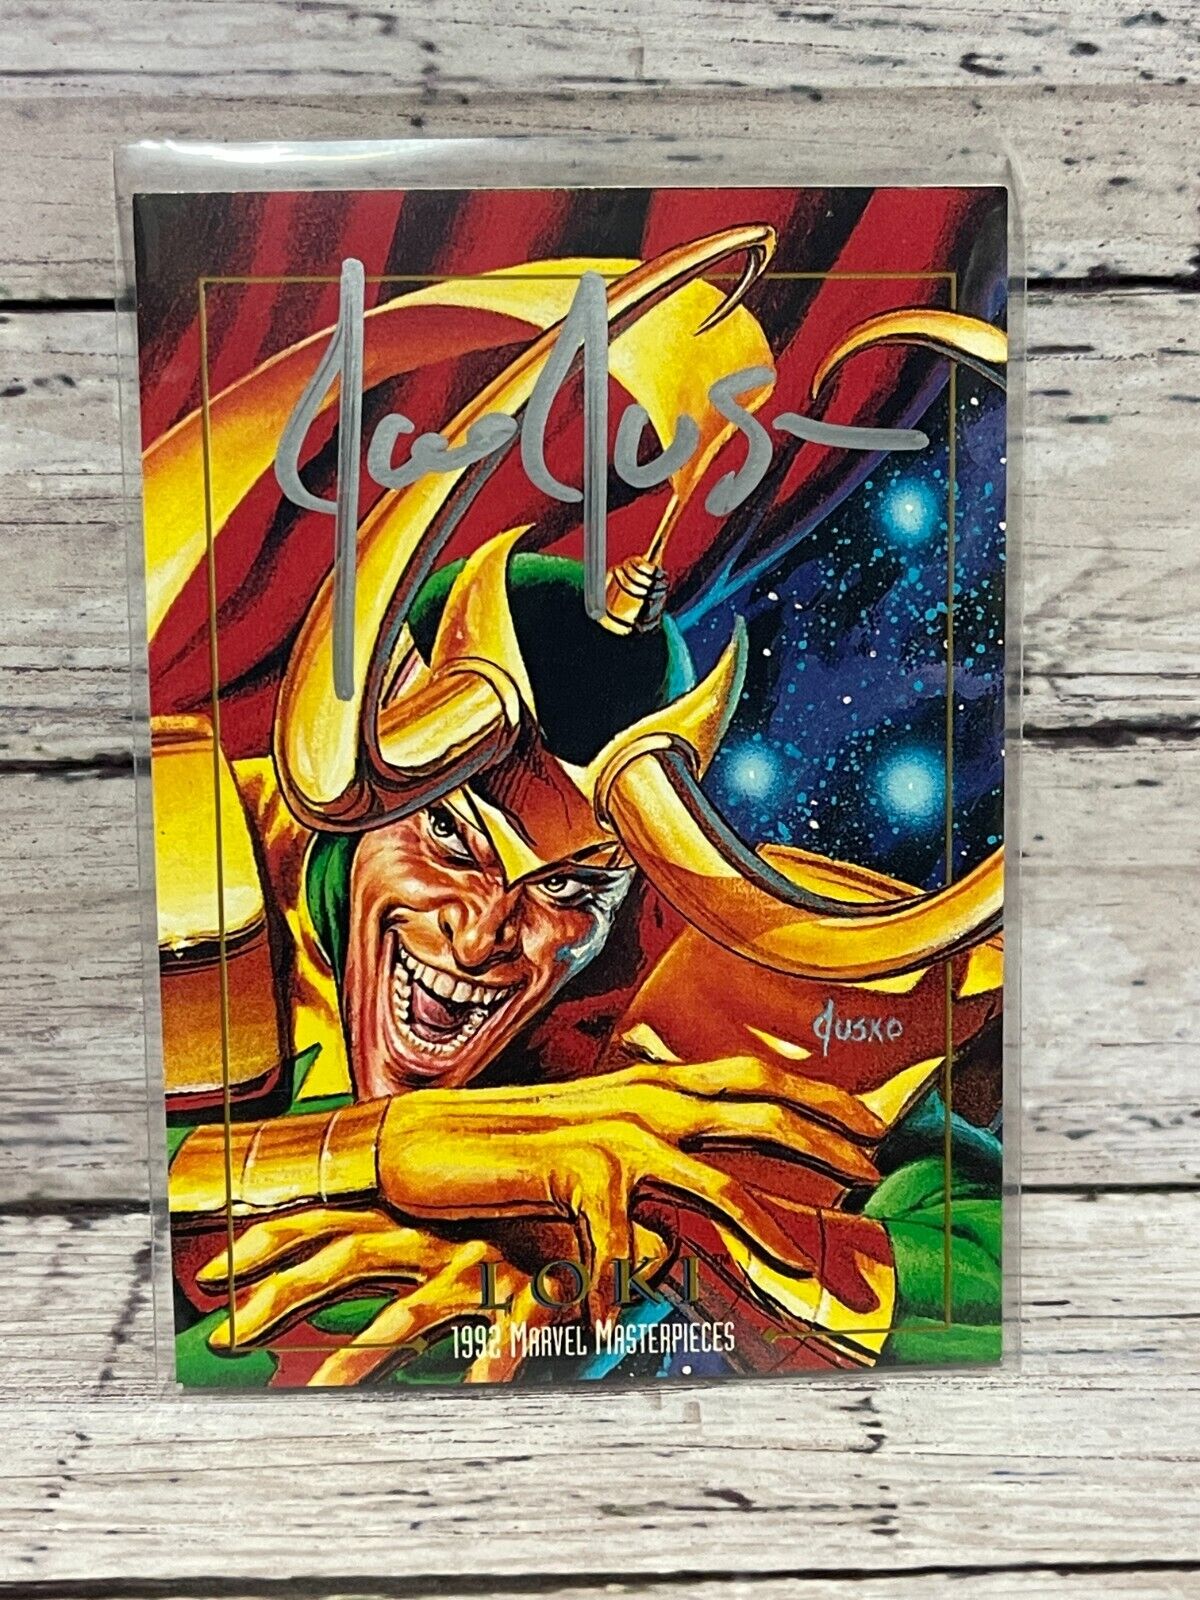 LOKI #50 Skybox 1992 Marvel Masterpieces Card Signed by JOE JUSKO